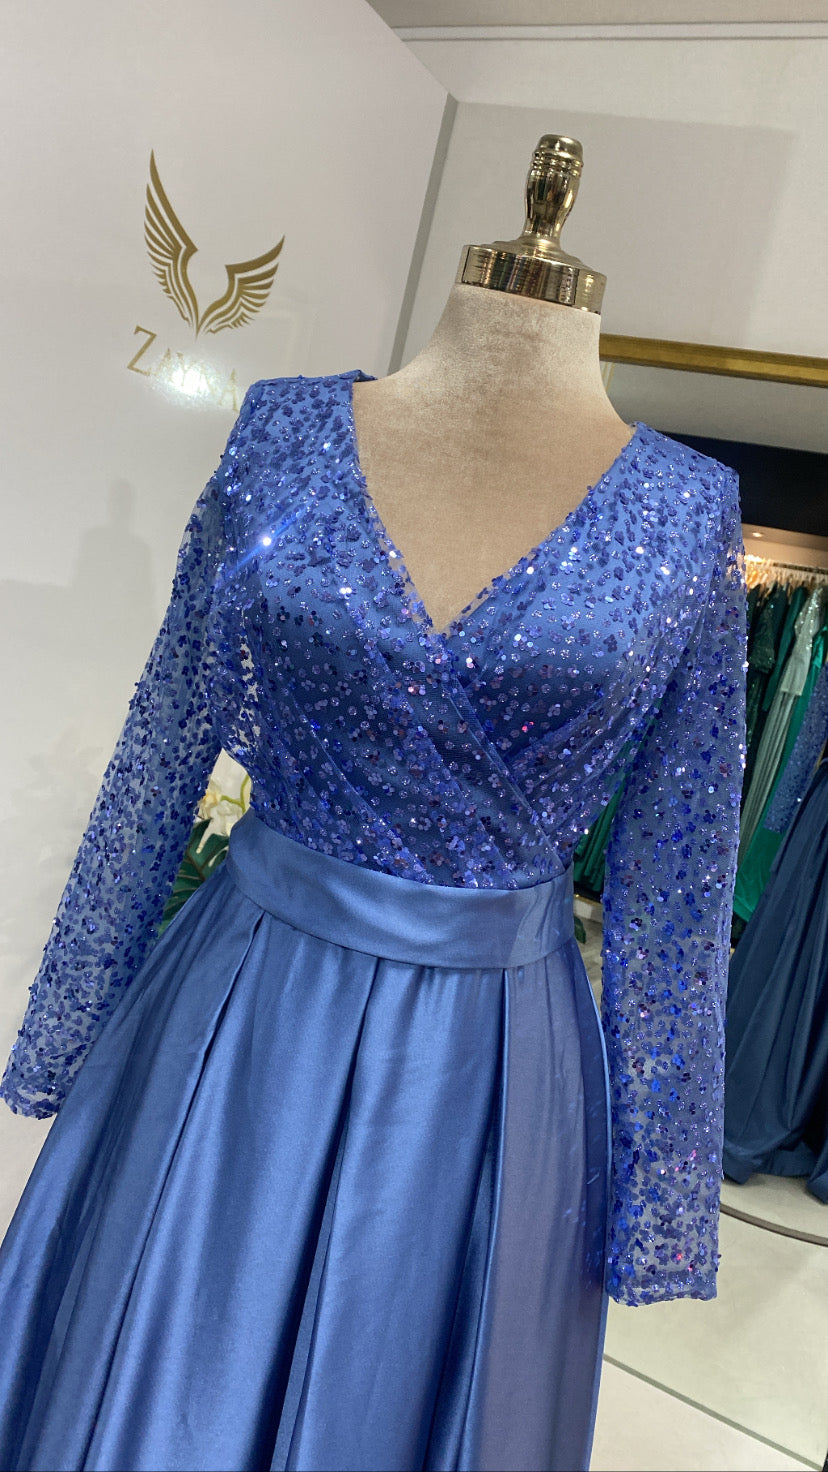 Elegant blue dress with sequins, shiny, satin